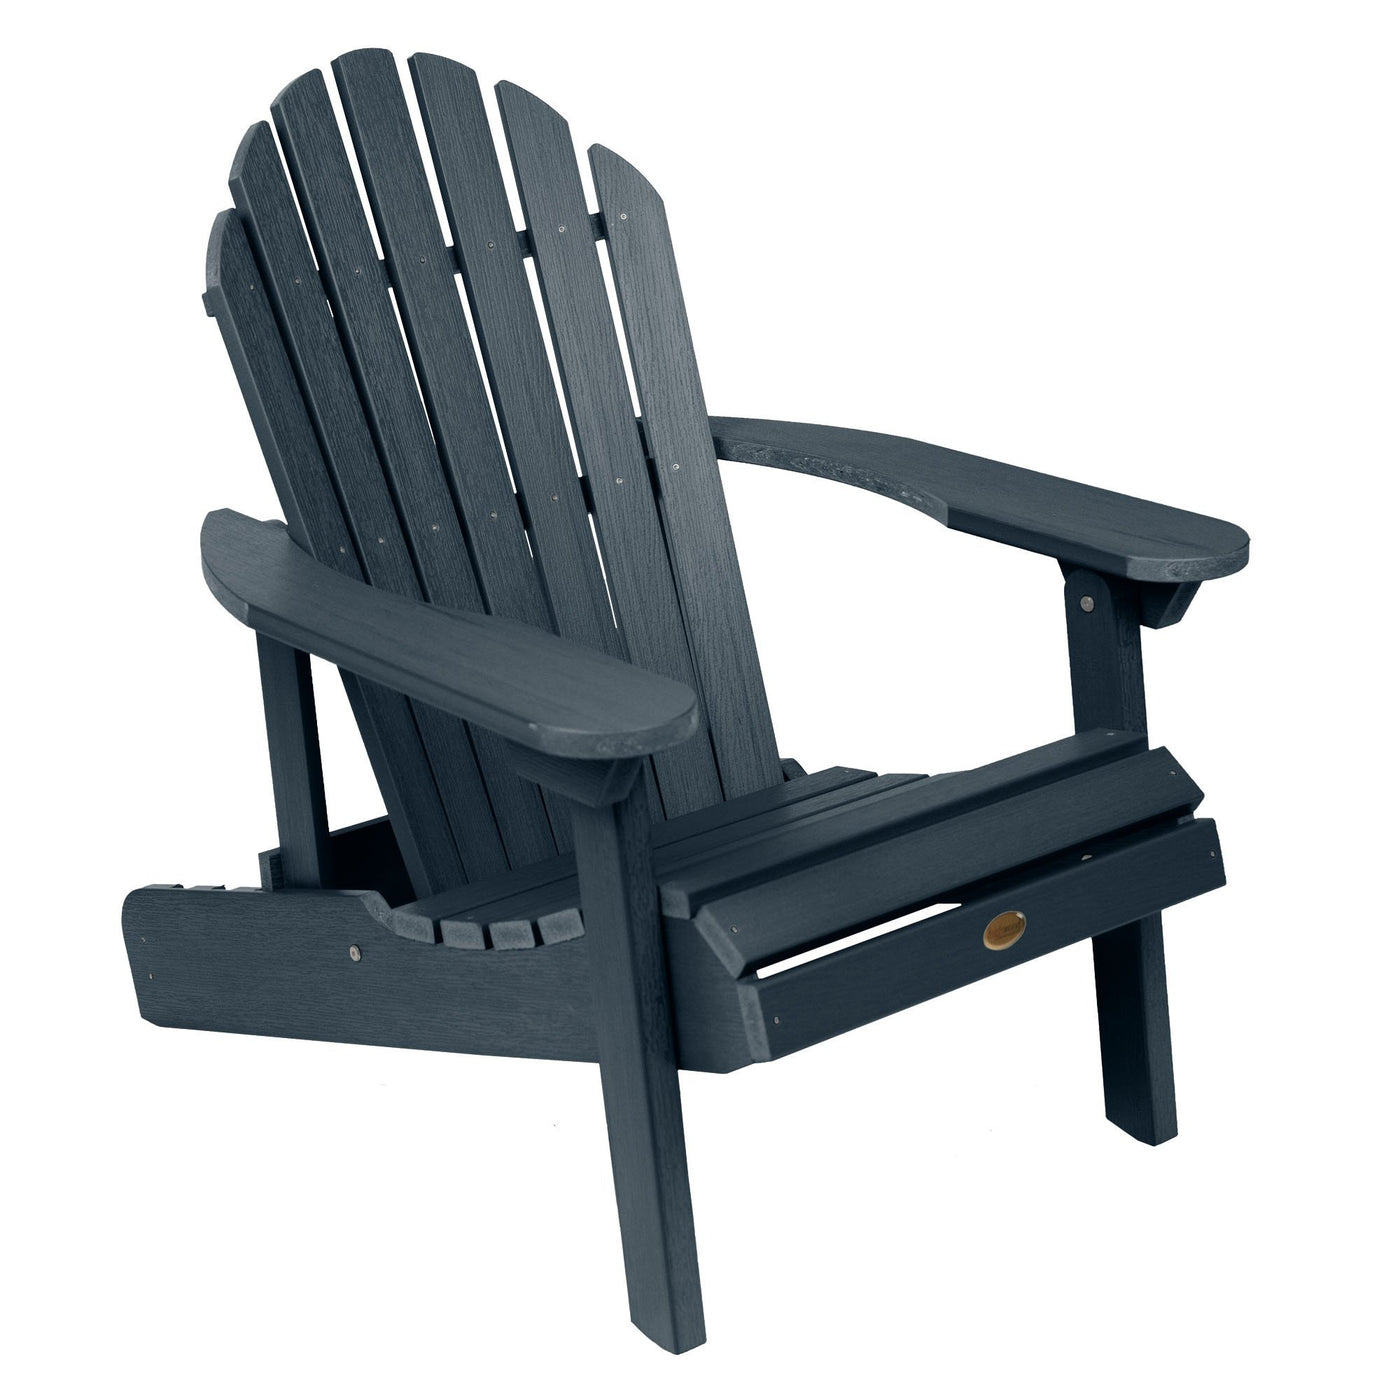 Hamilton Adirondack chair in Federal Blue